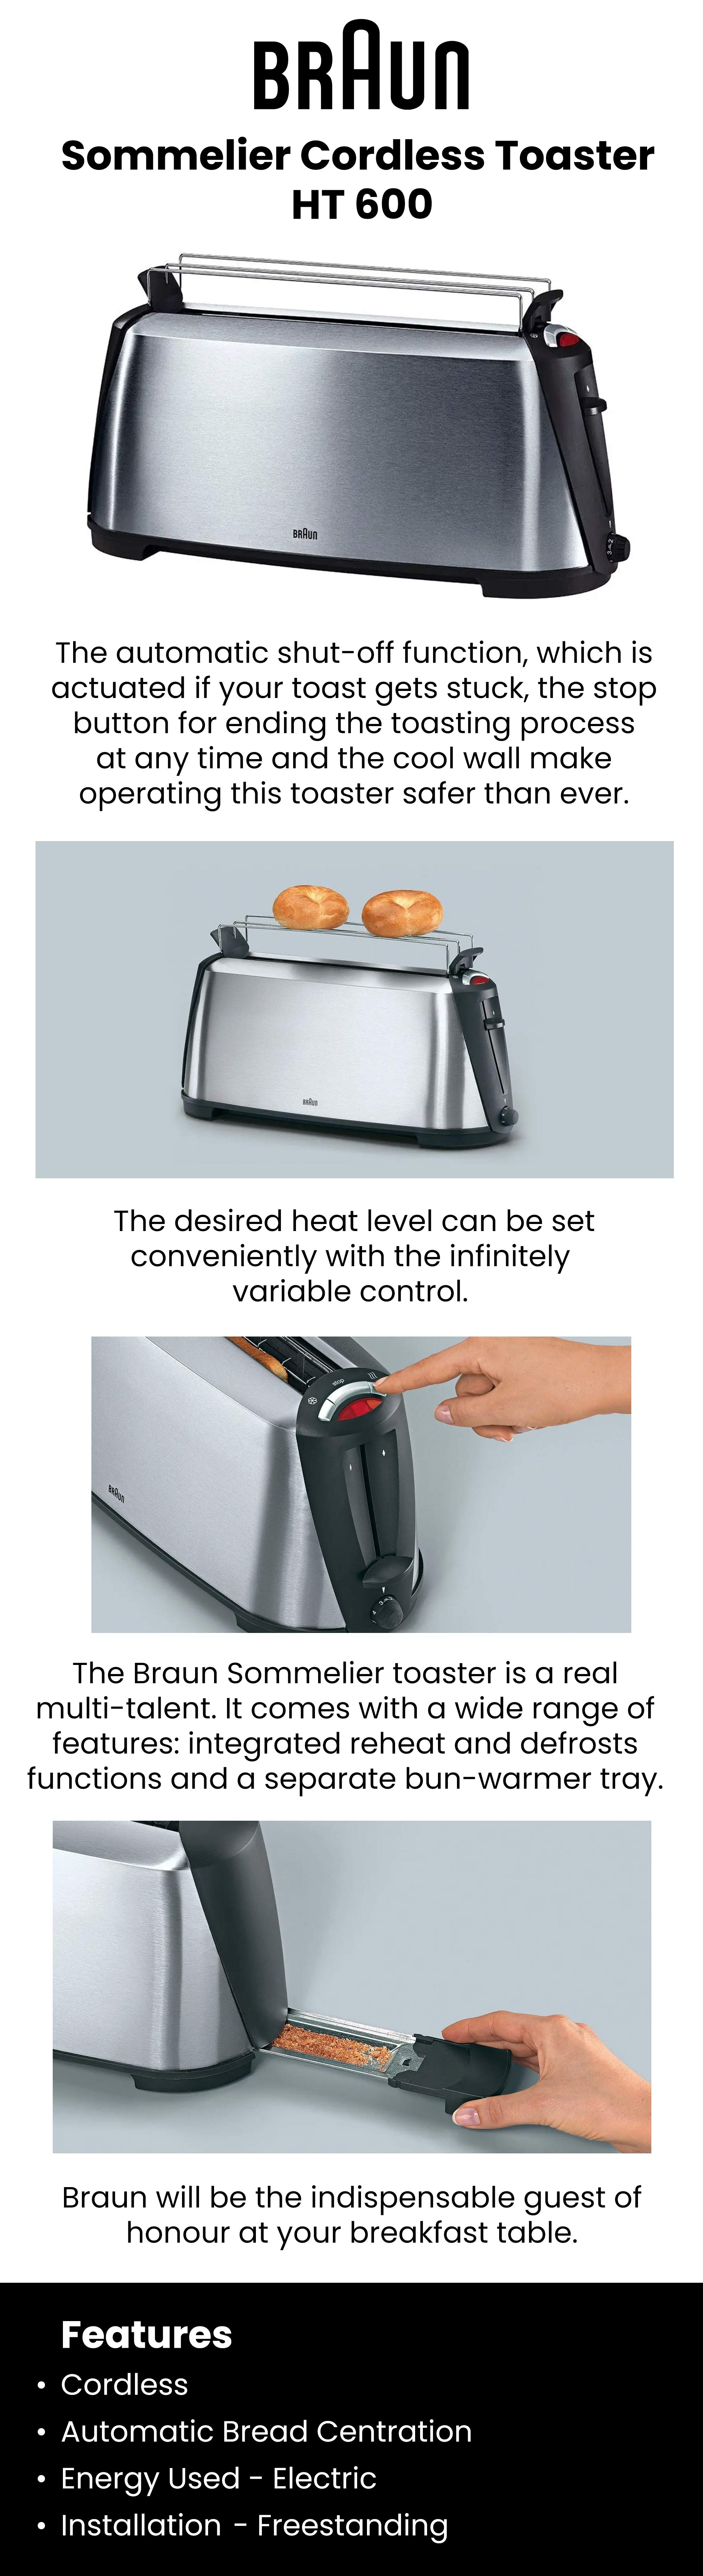 BRAUN Sommelier Cordless Toaster 1000.0 W HT 600 Grey Egypt